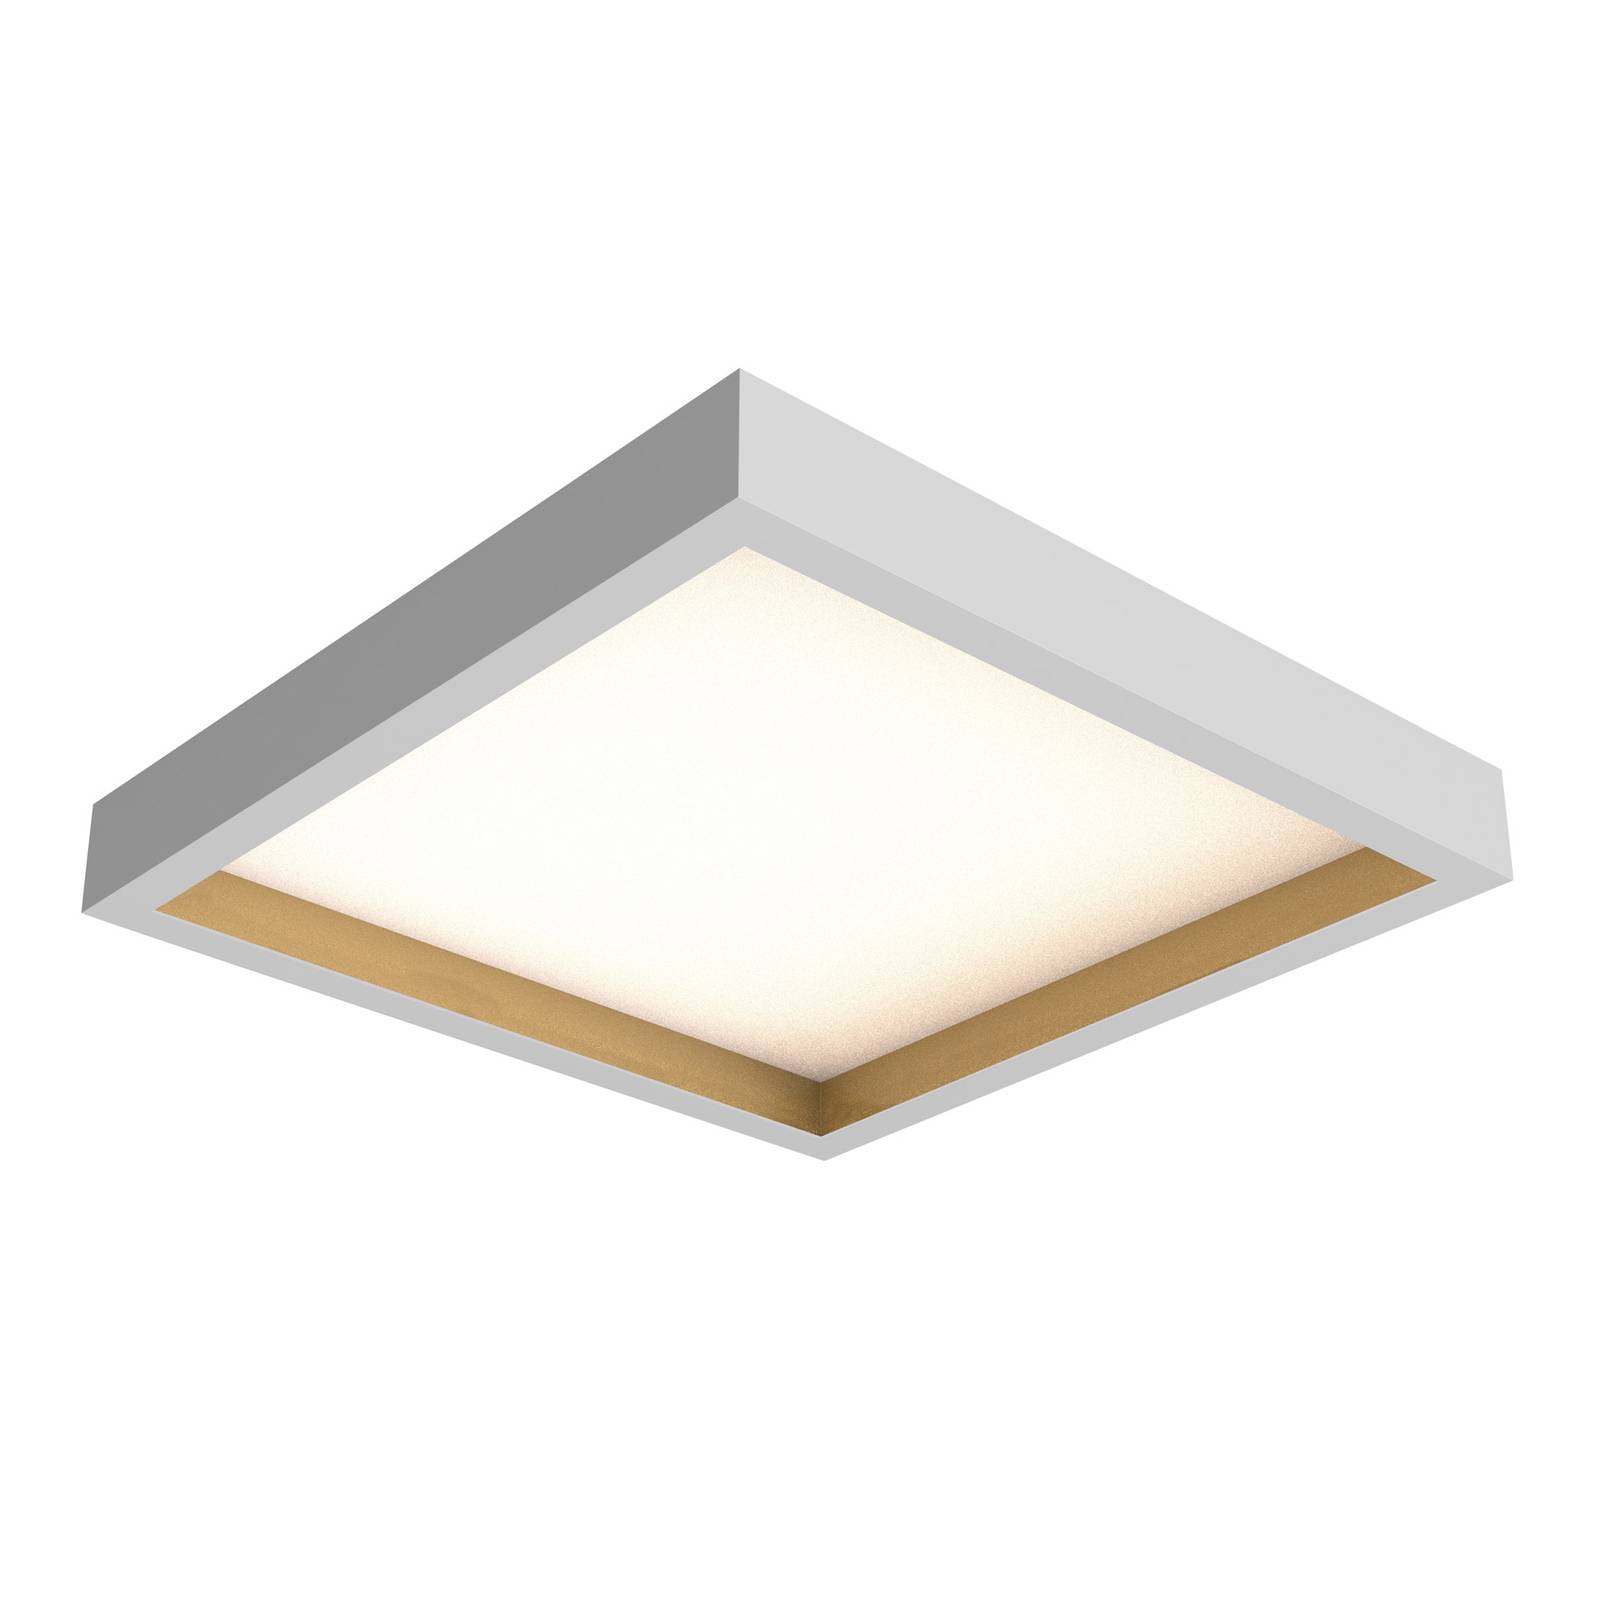 Image of Valencia plafonnier LED, blanc/doré, 60x60 cm 4052014062266